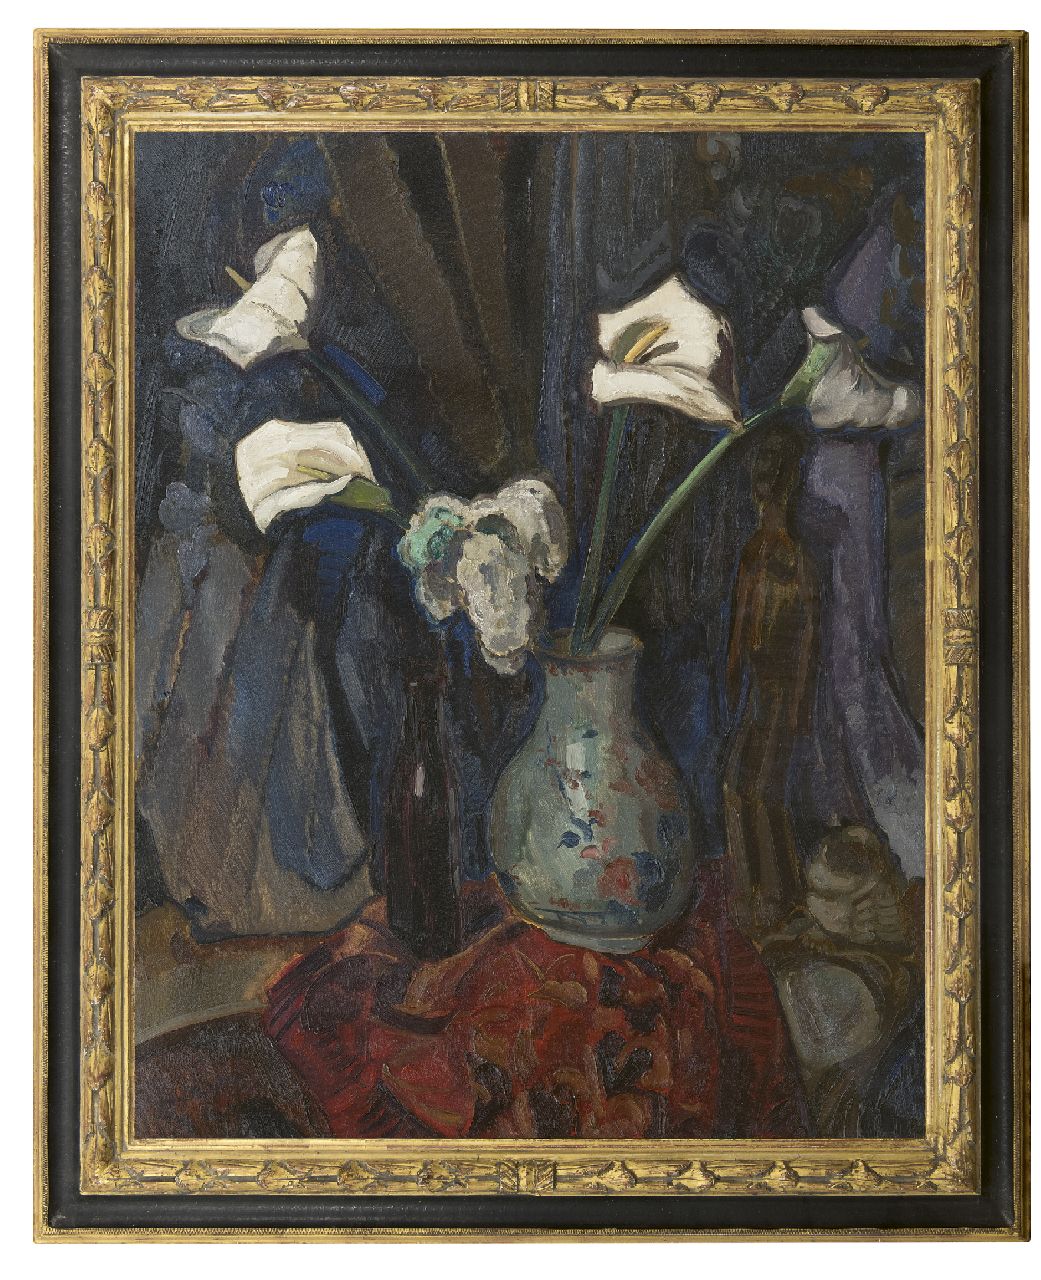 Filarski D.H.W.  | 'Dirk' Herman Willem Filarski | Paintings offered for sale | Arums in a vase, oil on canvas 100.5 x 80.2 cm, signed l.l. and painted ca. 1918-1922